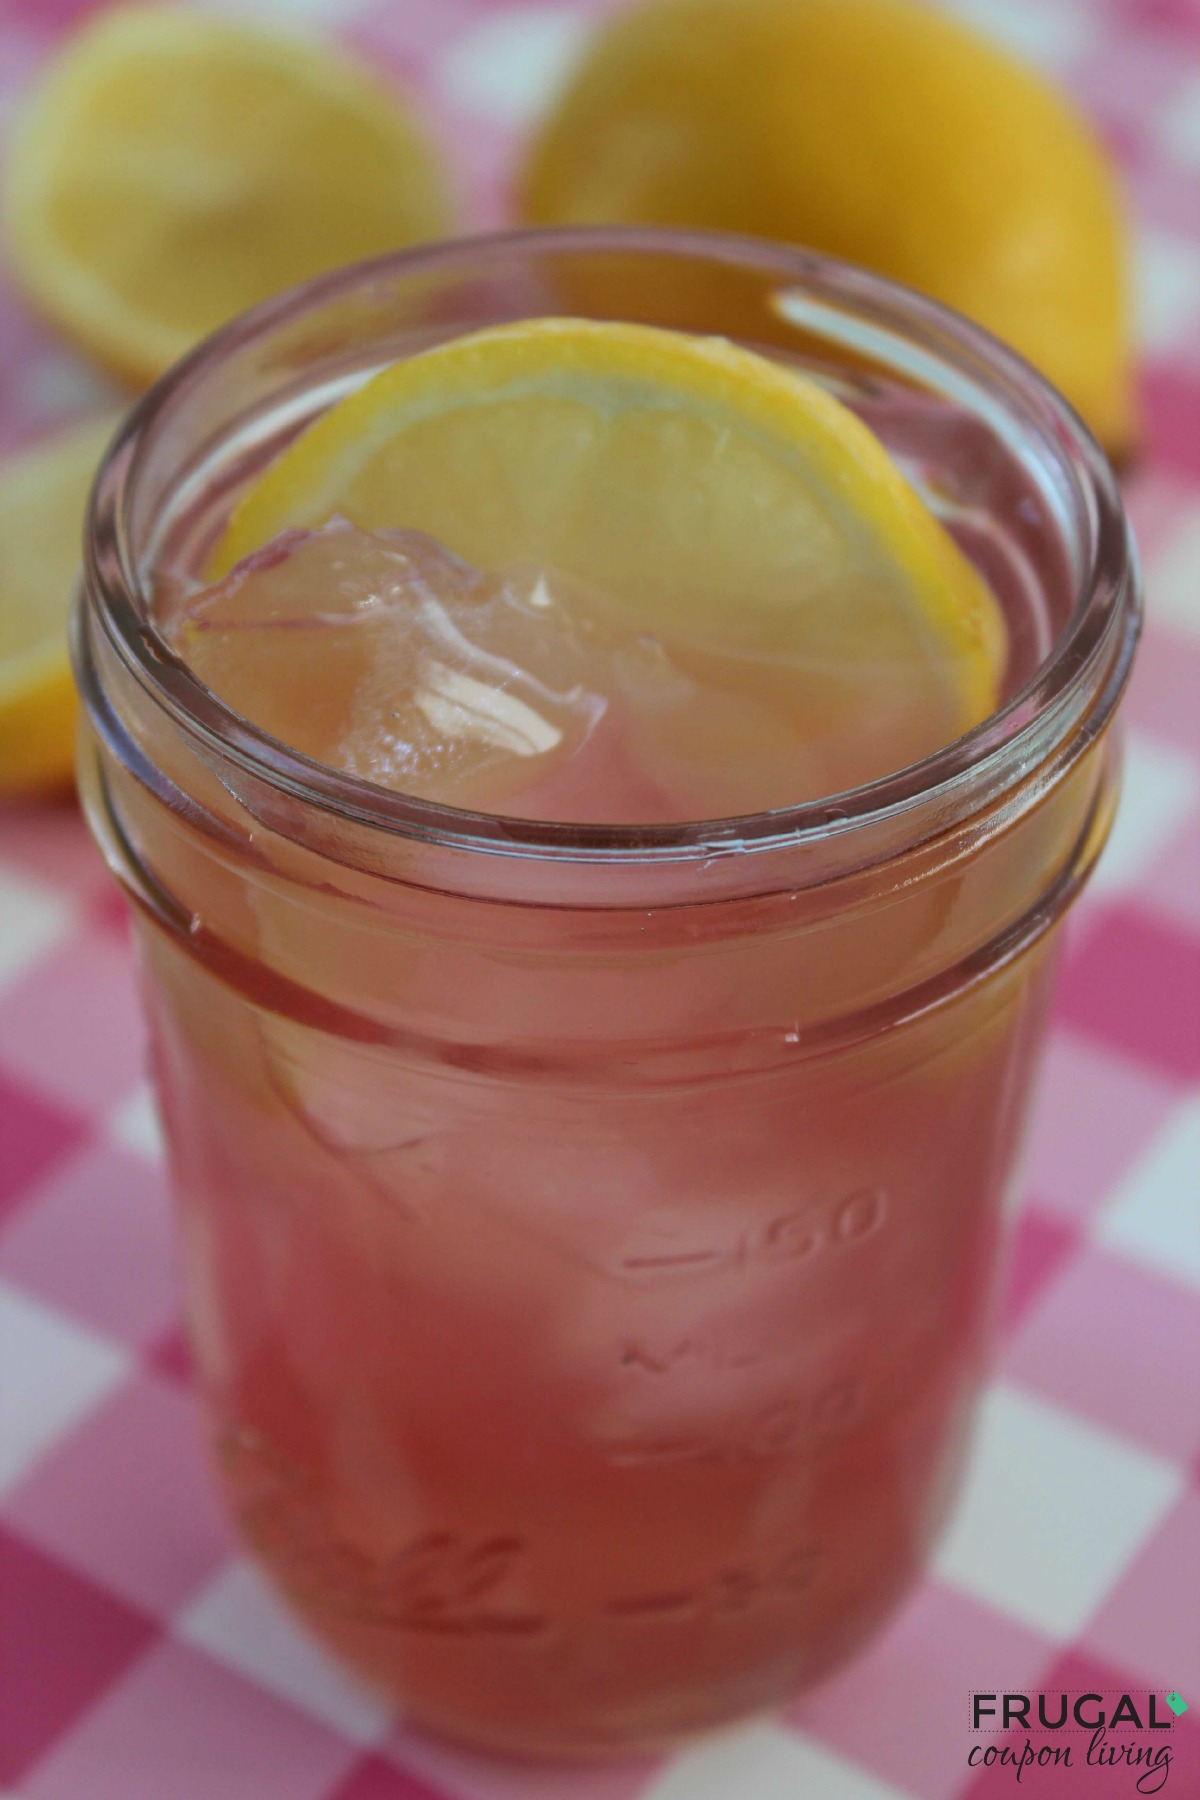 pink-lemonade-small-frugal-coupon-living-smaller